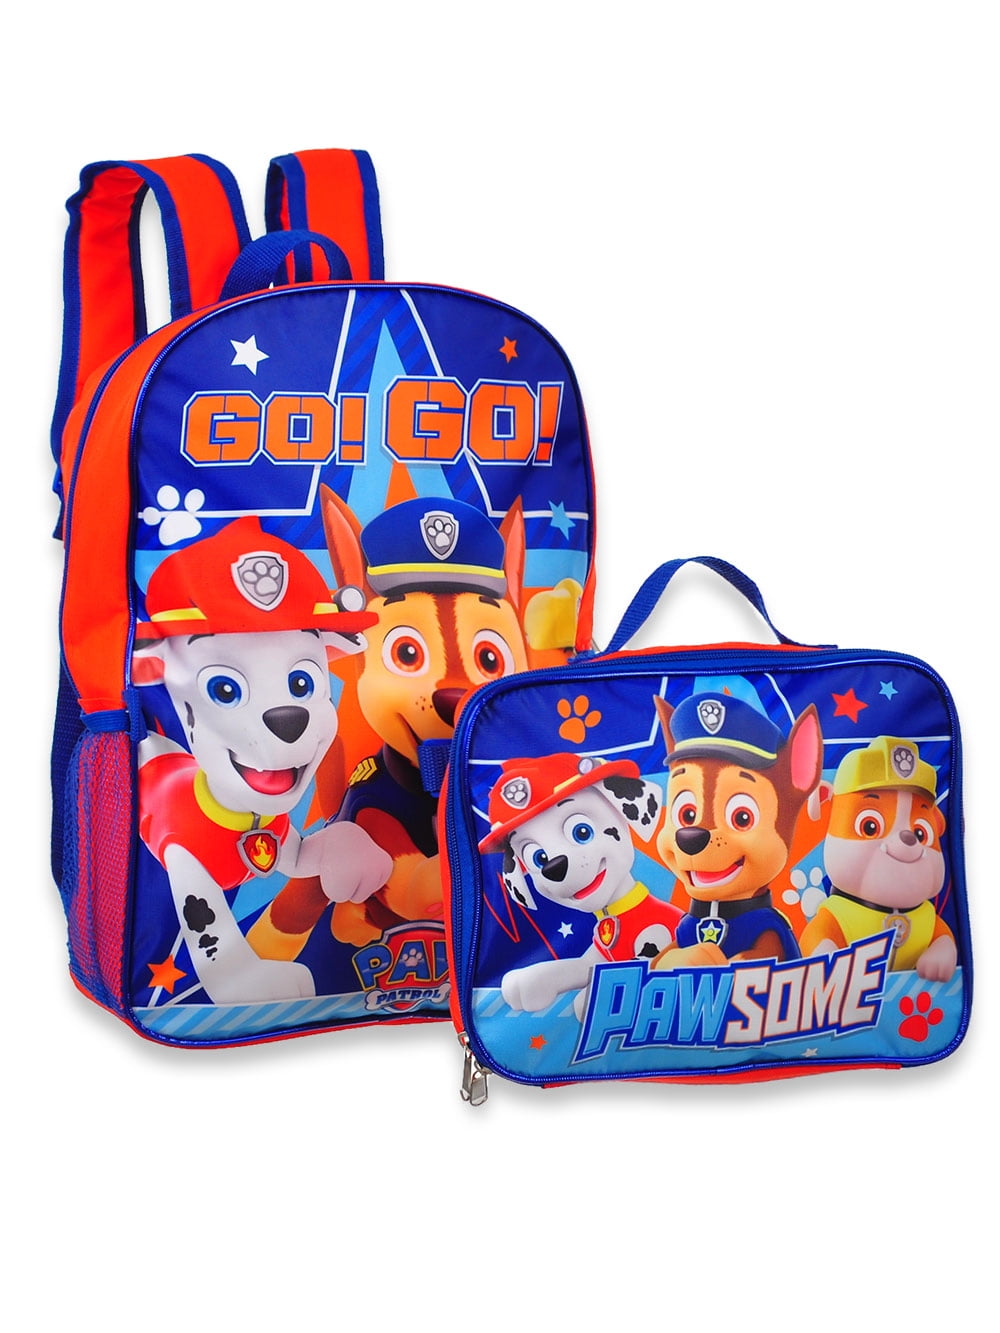 Kids School Disney Junior Bag Backpack Rucksack PE Paw Patrol Baby Shark Girls 